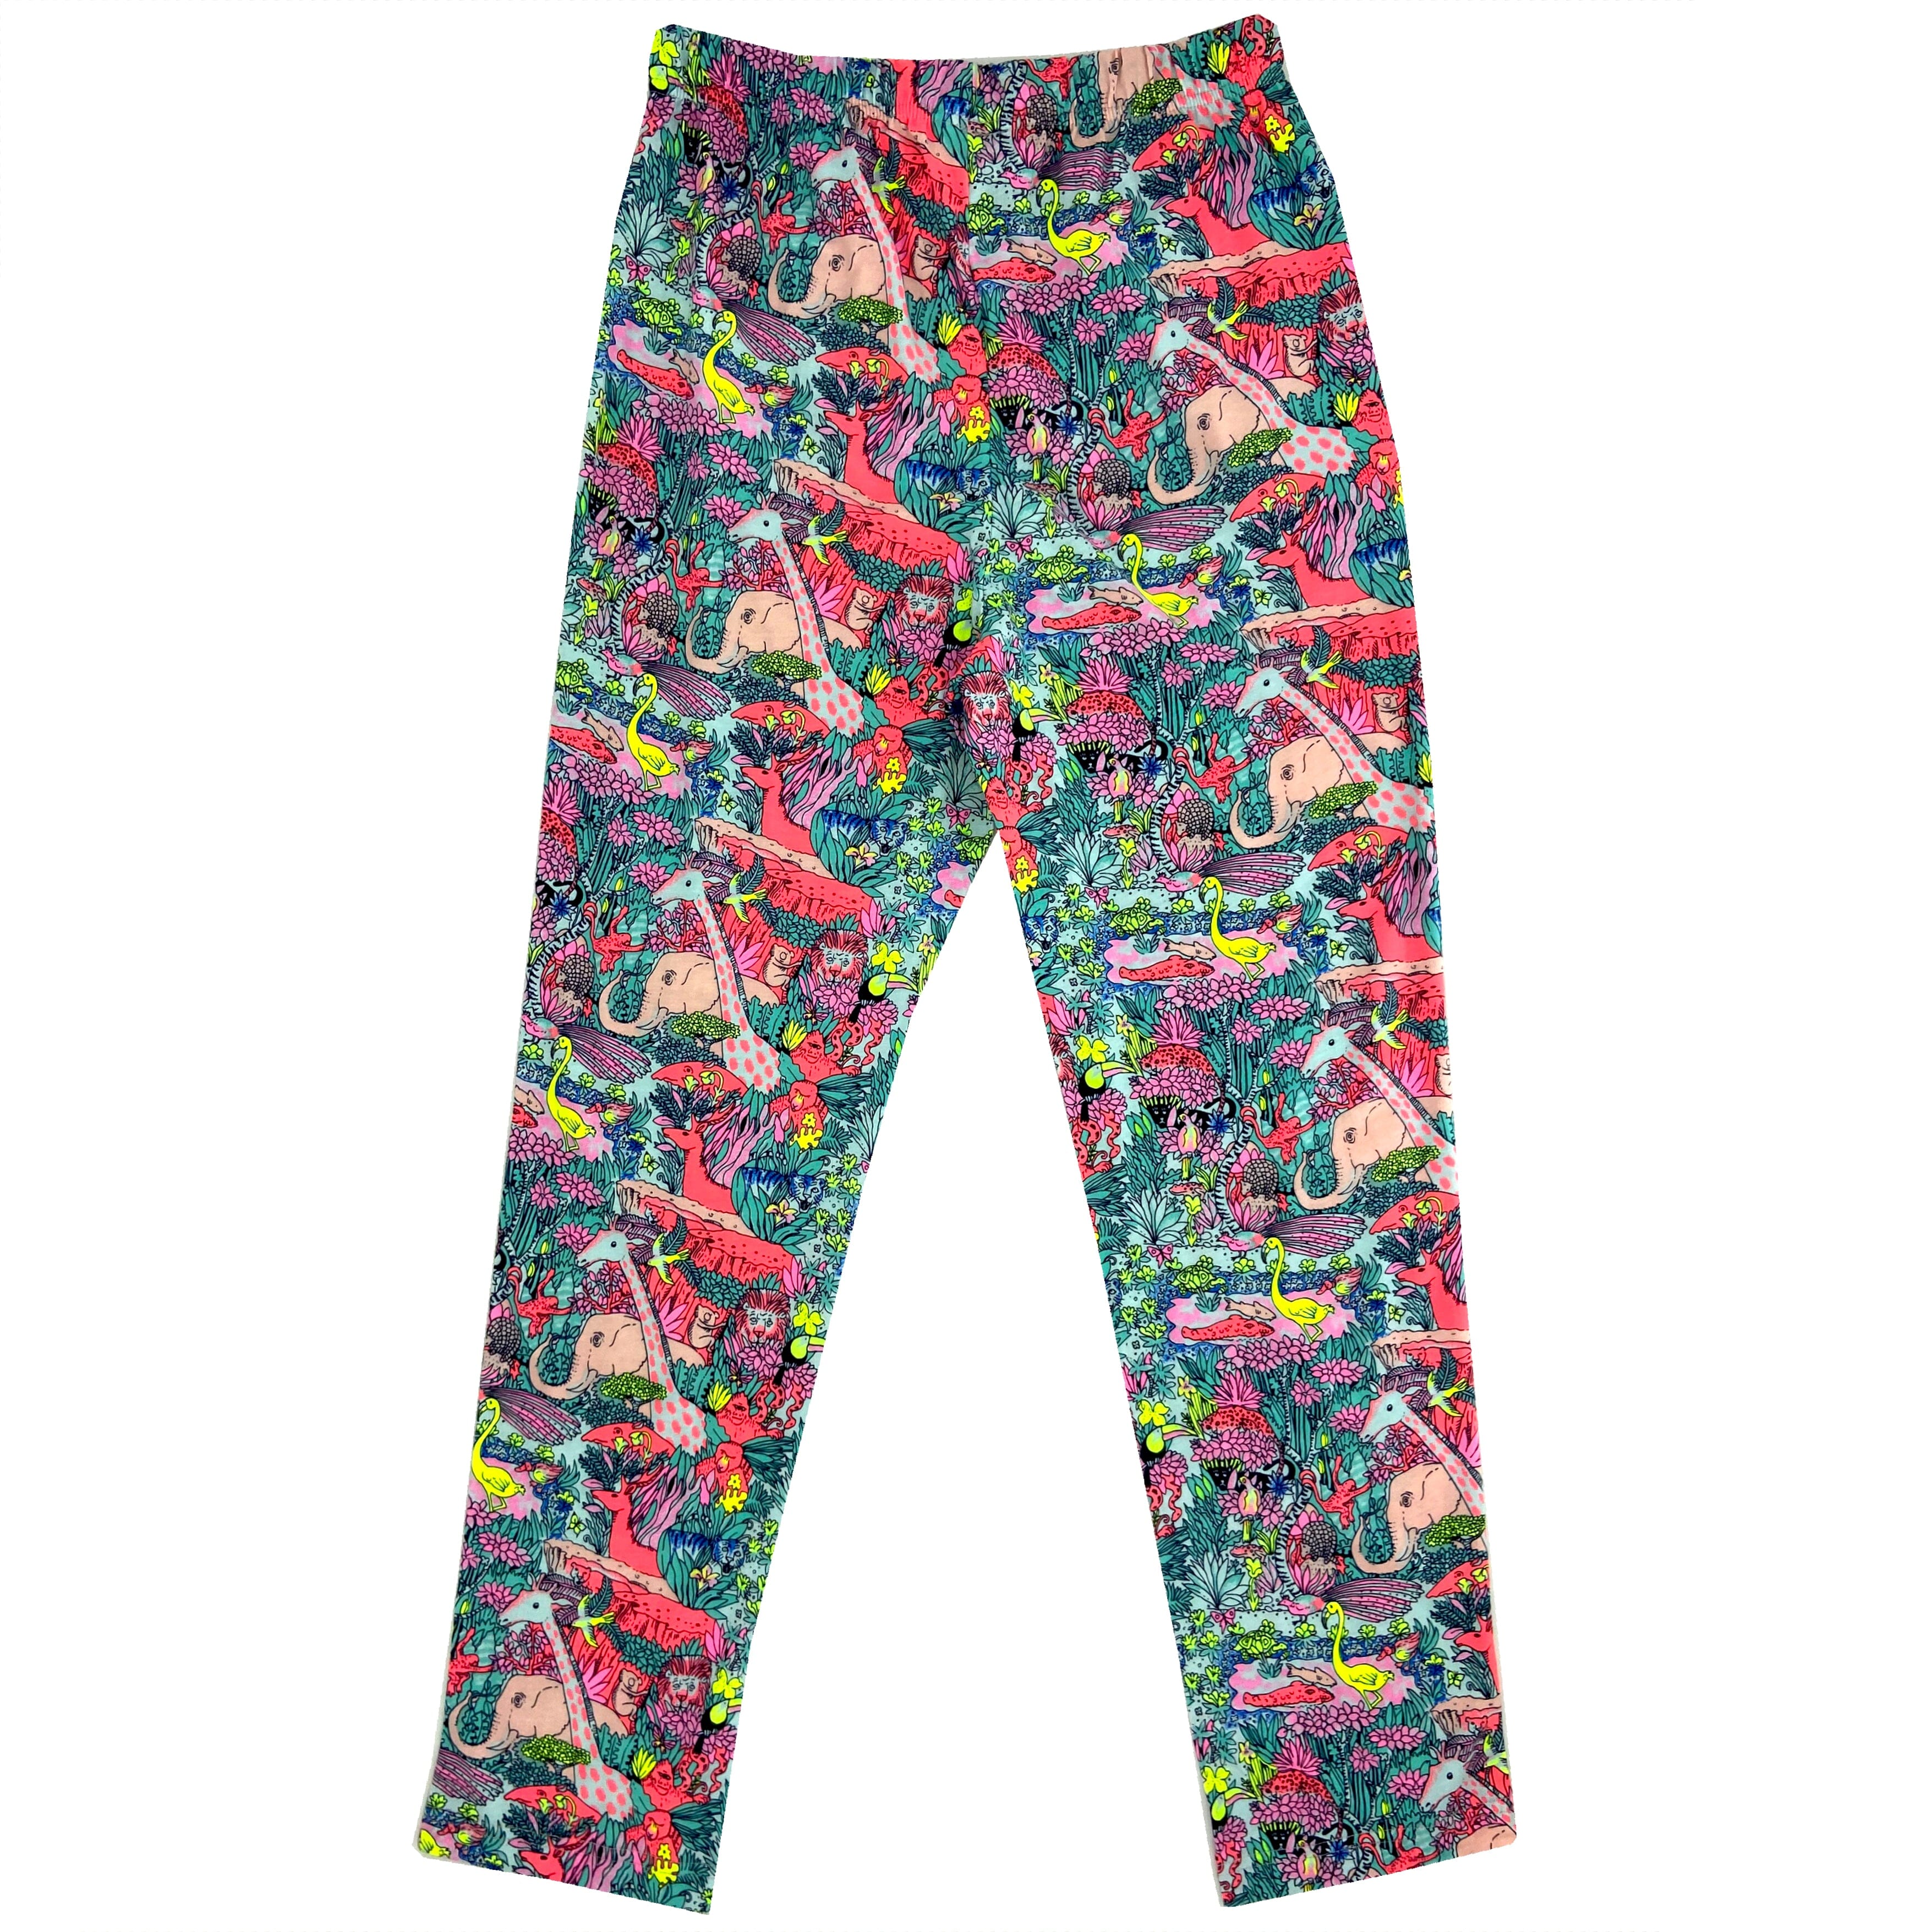 Women's Long Pajama Pants. Buy Colorful Patterned Lounge Pants Here